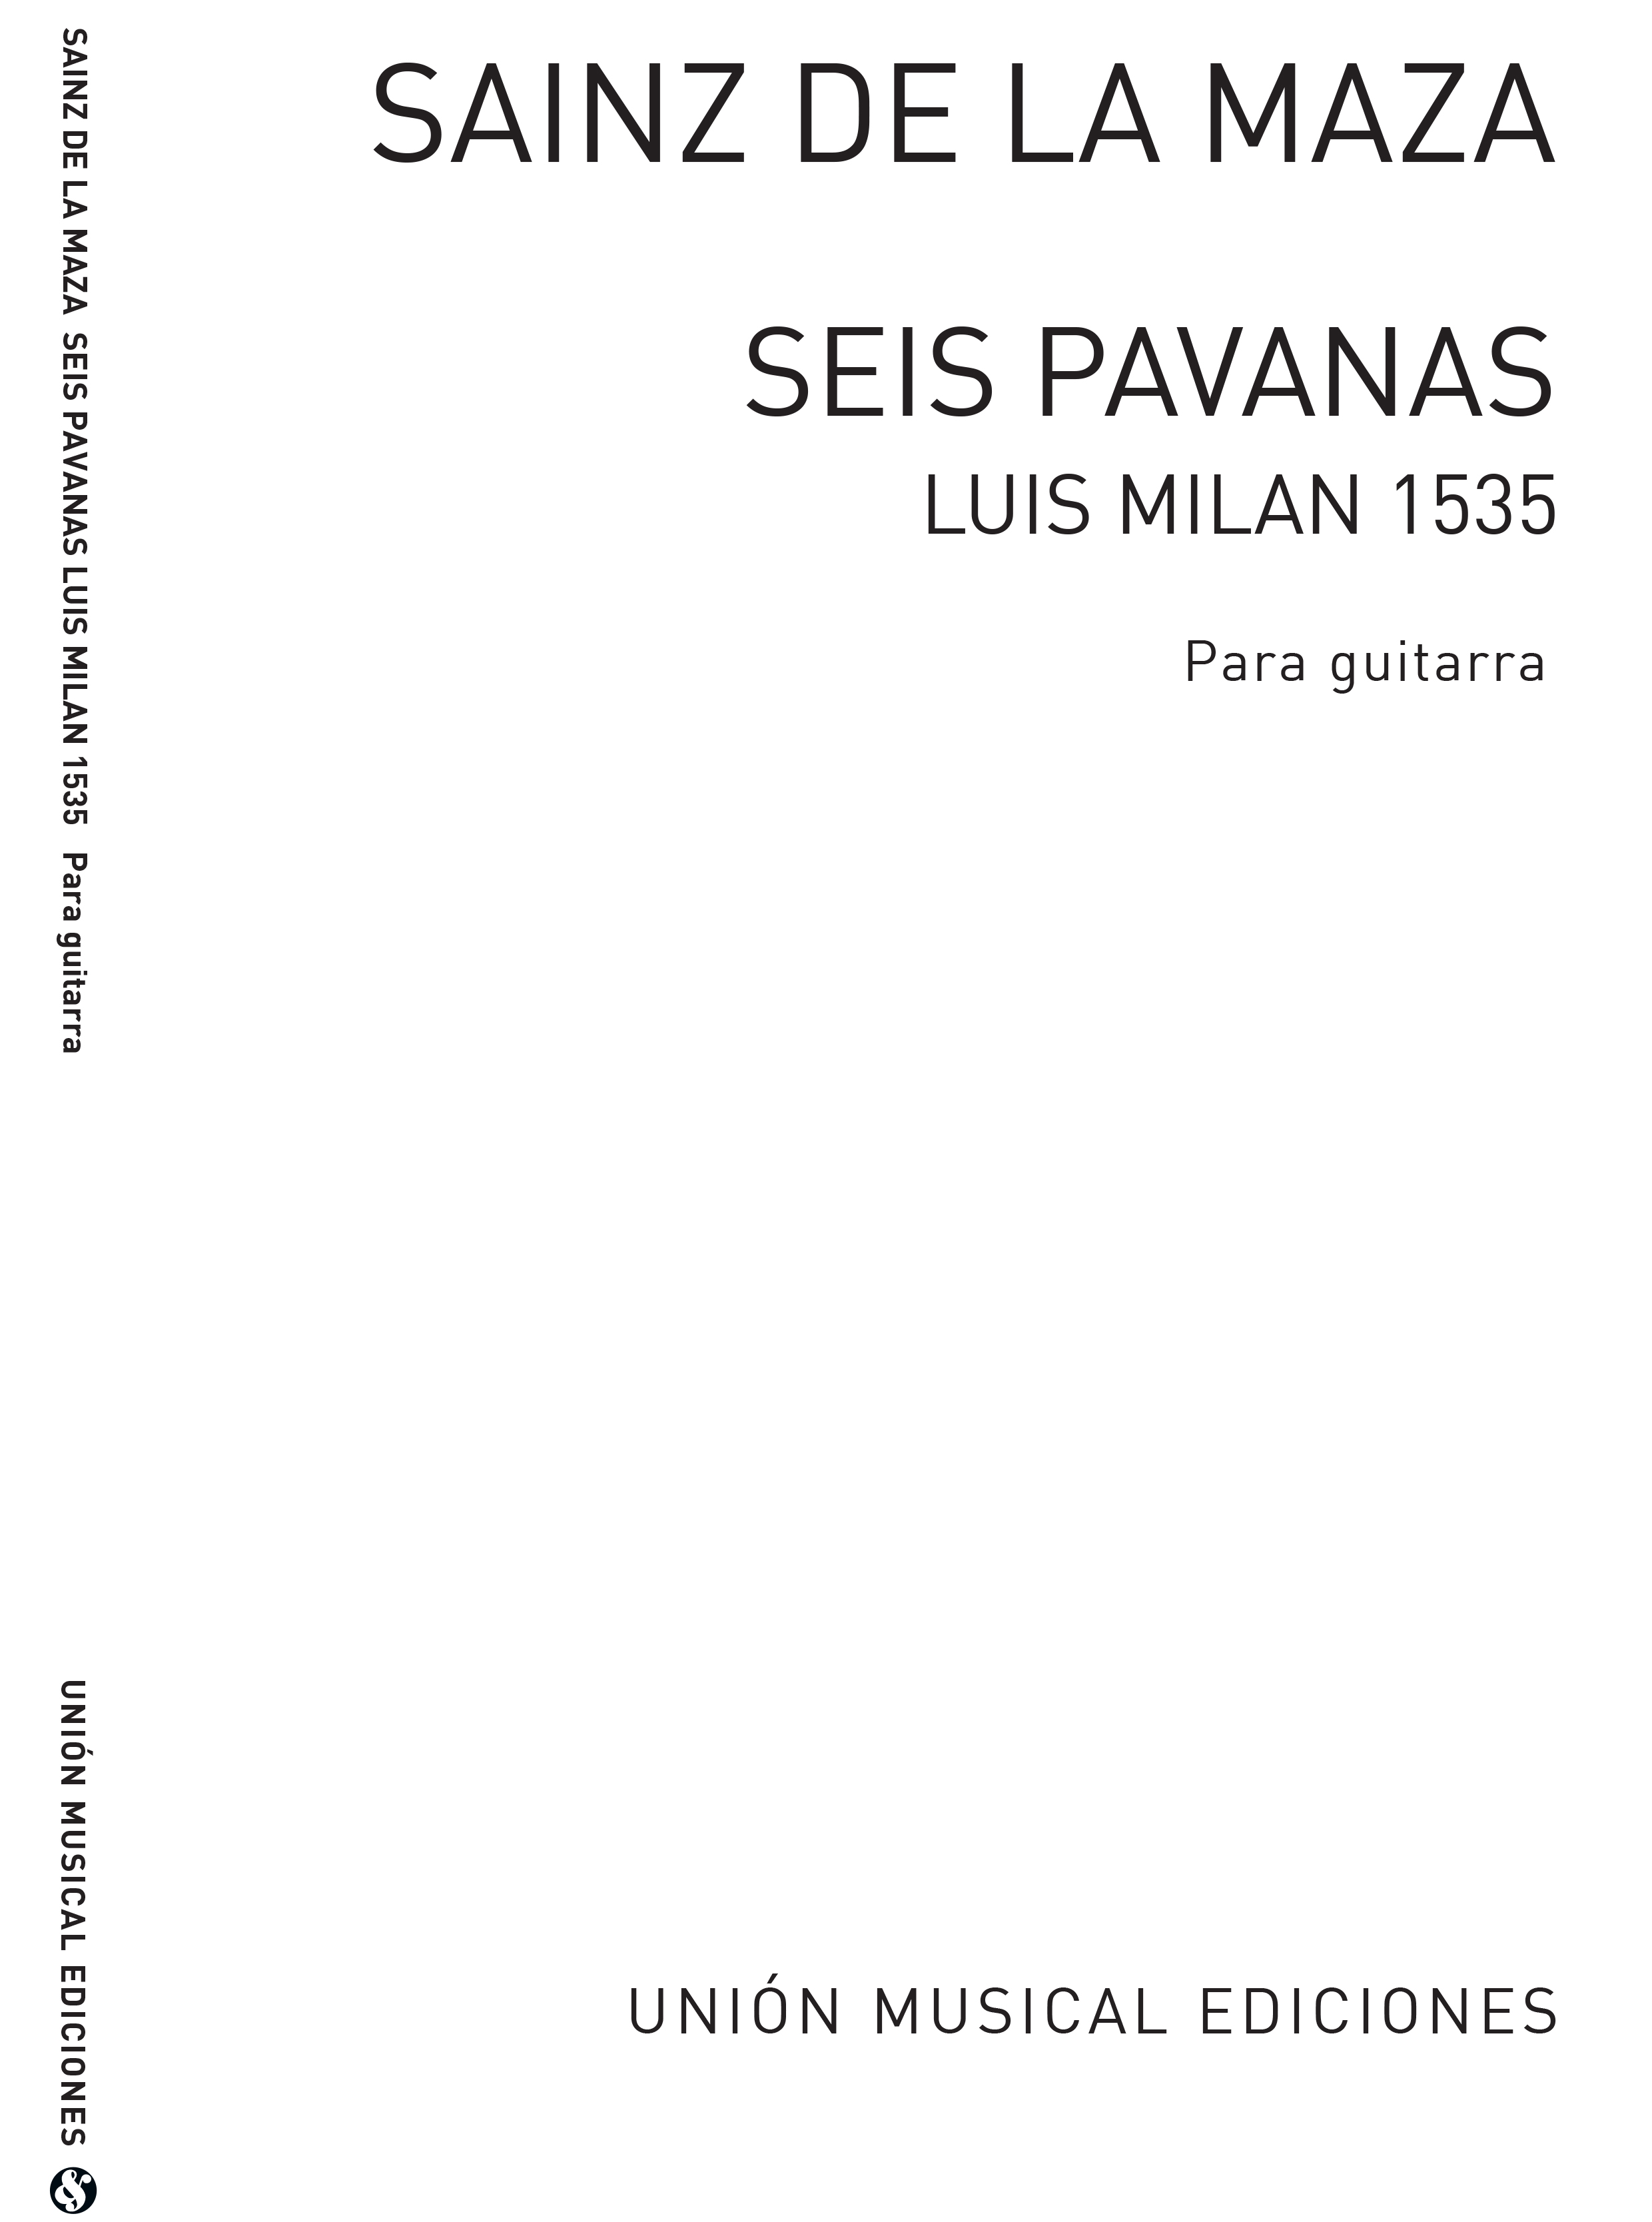 Luis de Miln Regino Sainz de la Maza: Seis Pavanas: Guitar: Instrumental Work